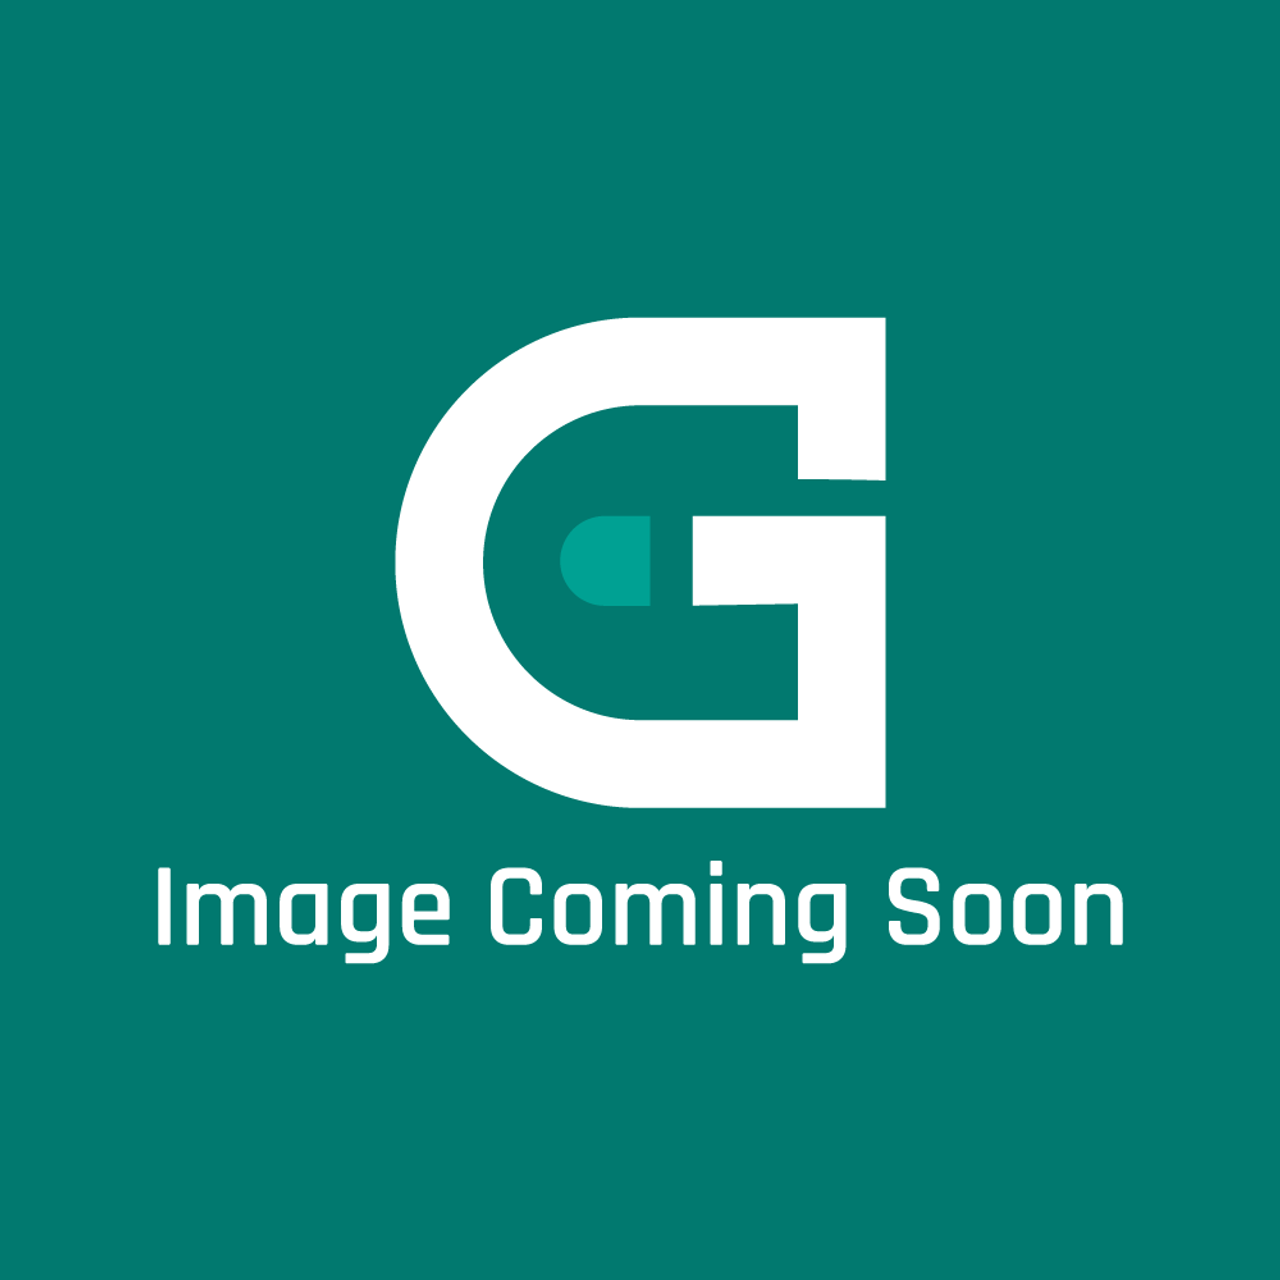 GE Appliances 81W34 - 607421-03 X13 1/2Hp Motor Prog. Blower - Image Coming Soon!